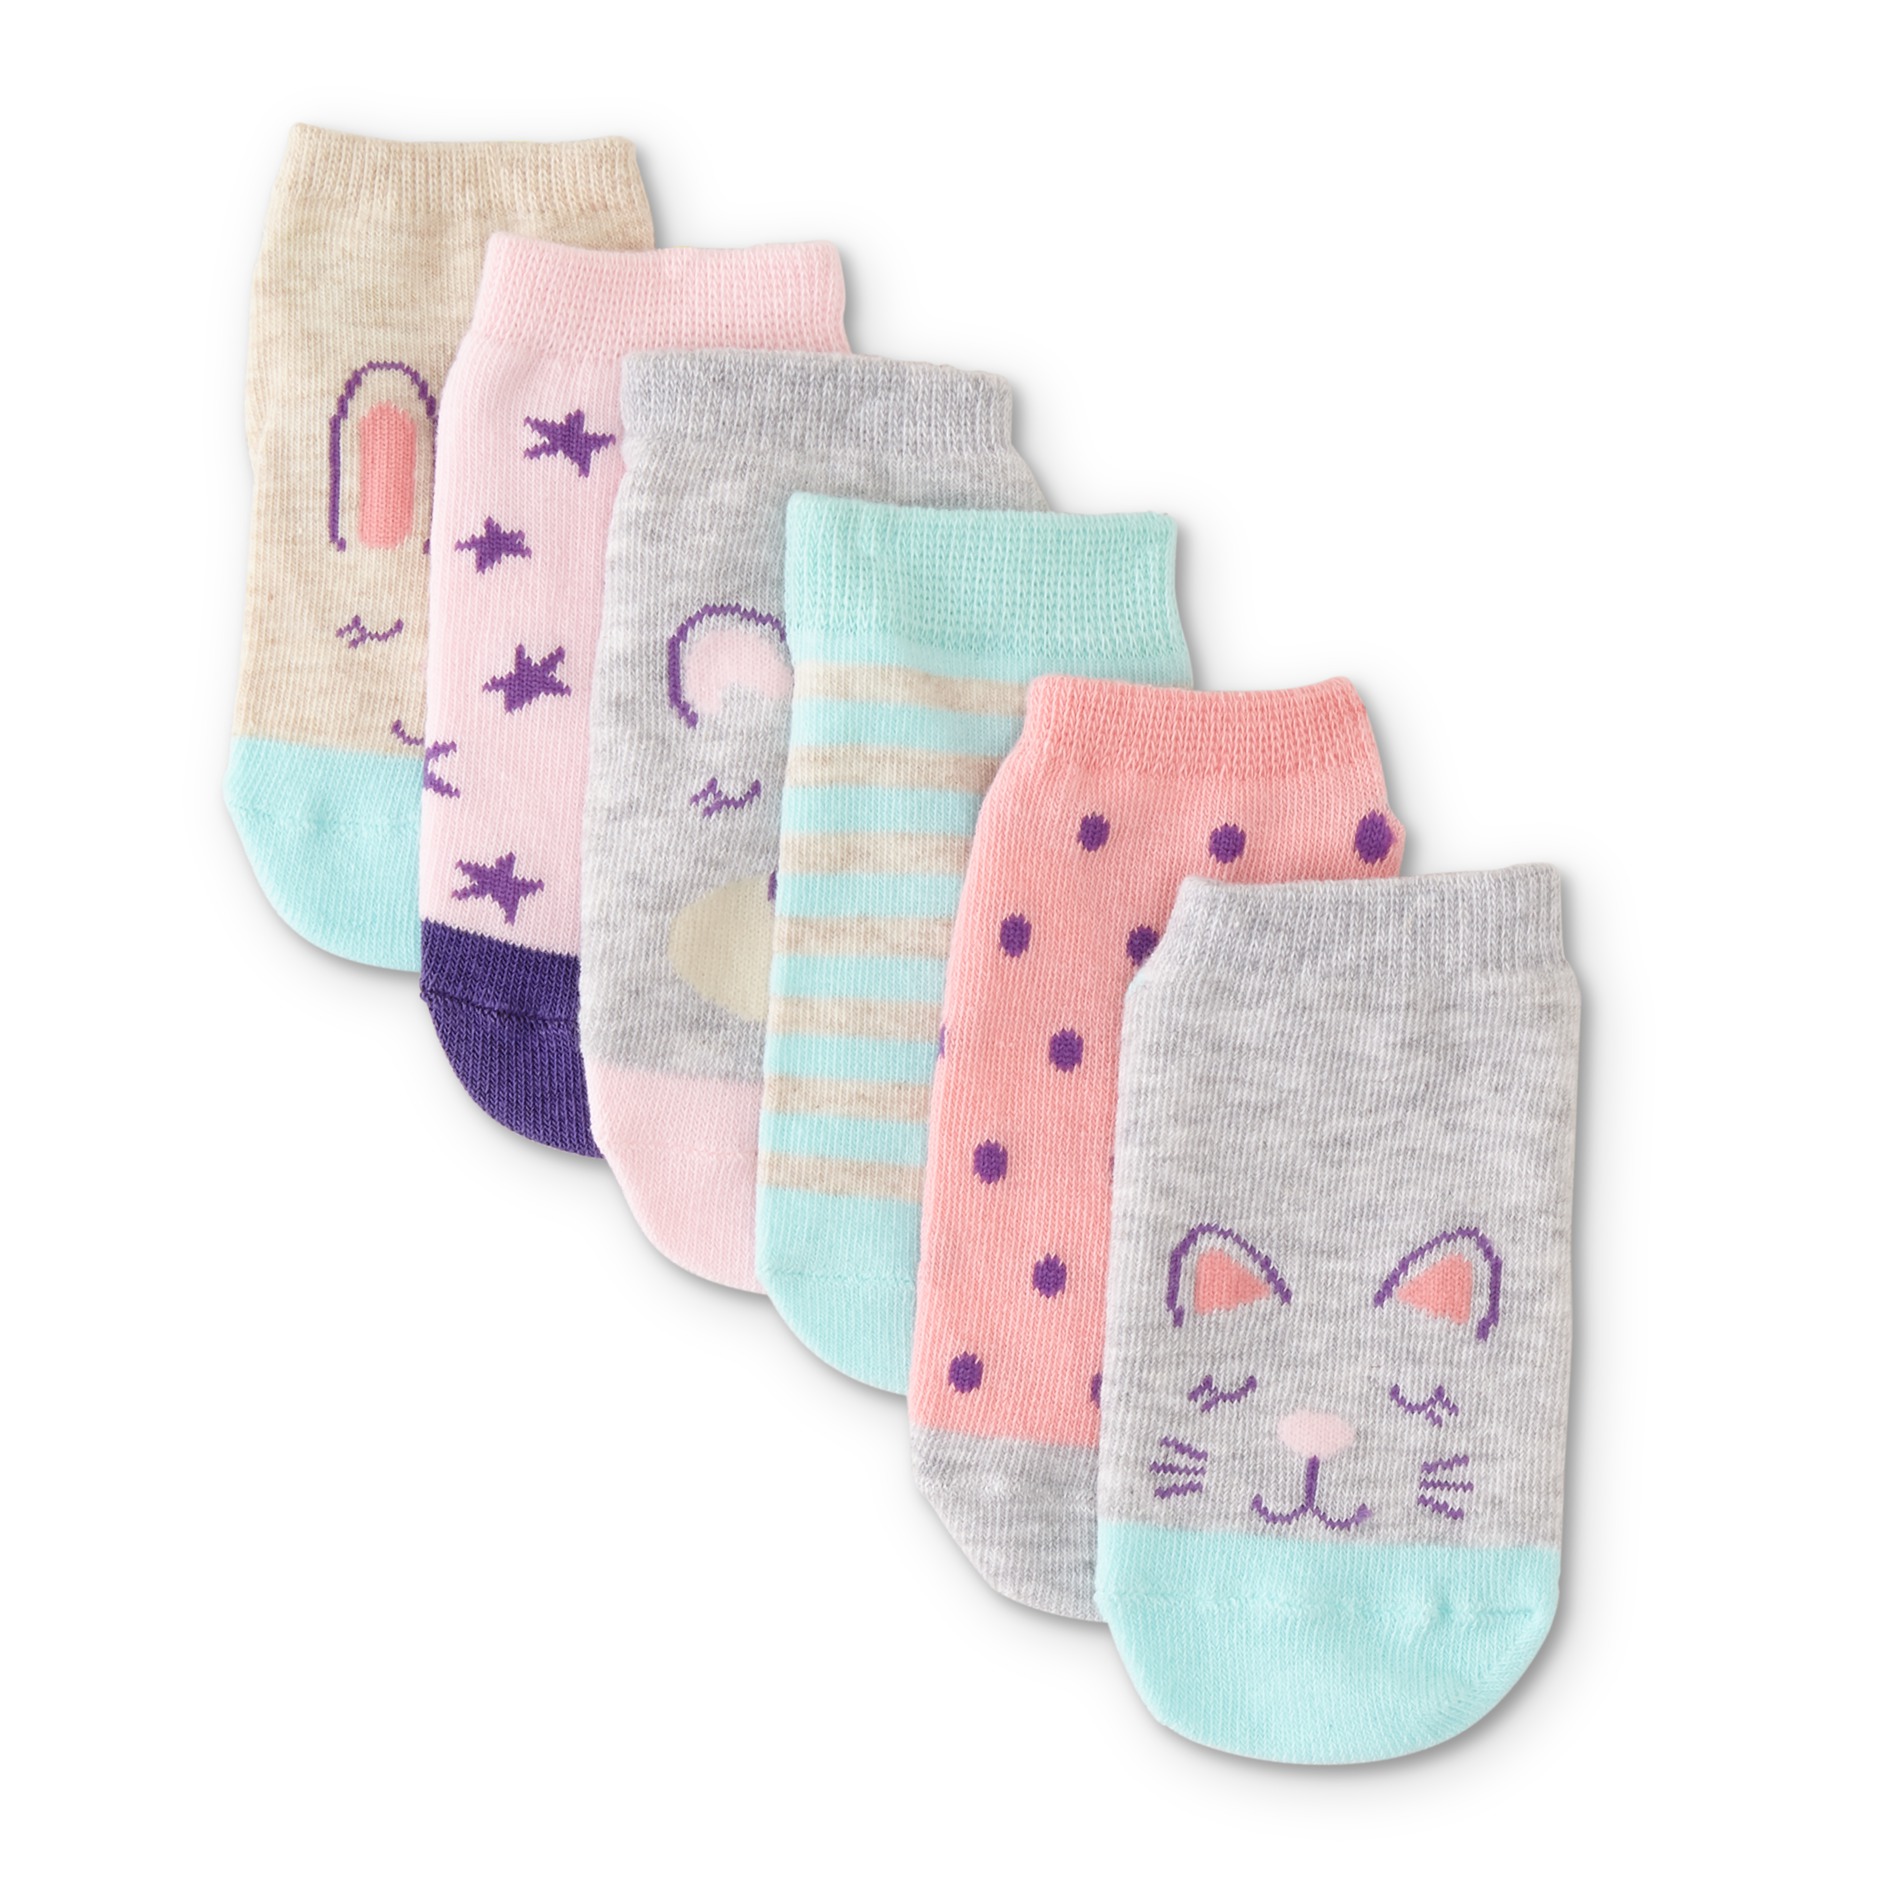 Joe Boxer Toddler Girls' 6-Pairs Low-Cut Socks - Assortment